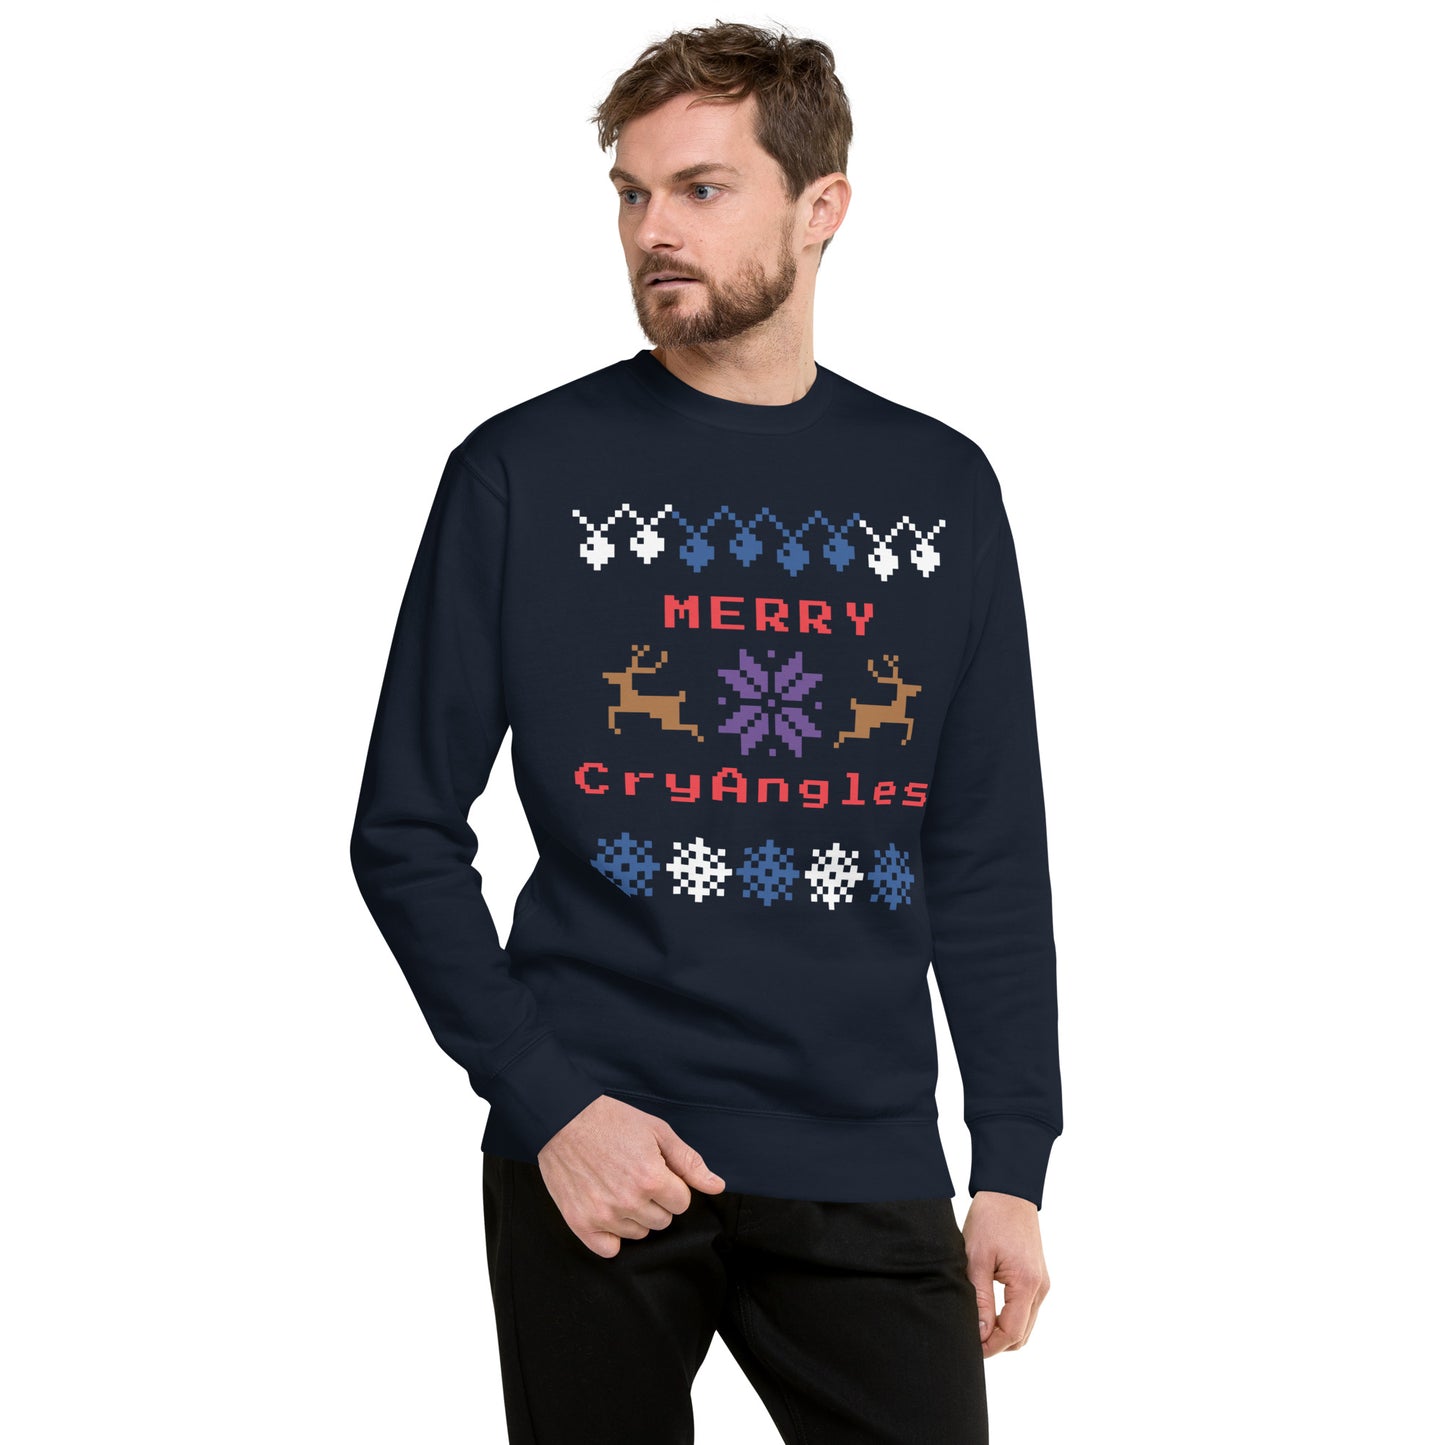 Merry CryAngles Sweater